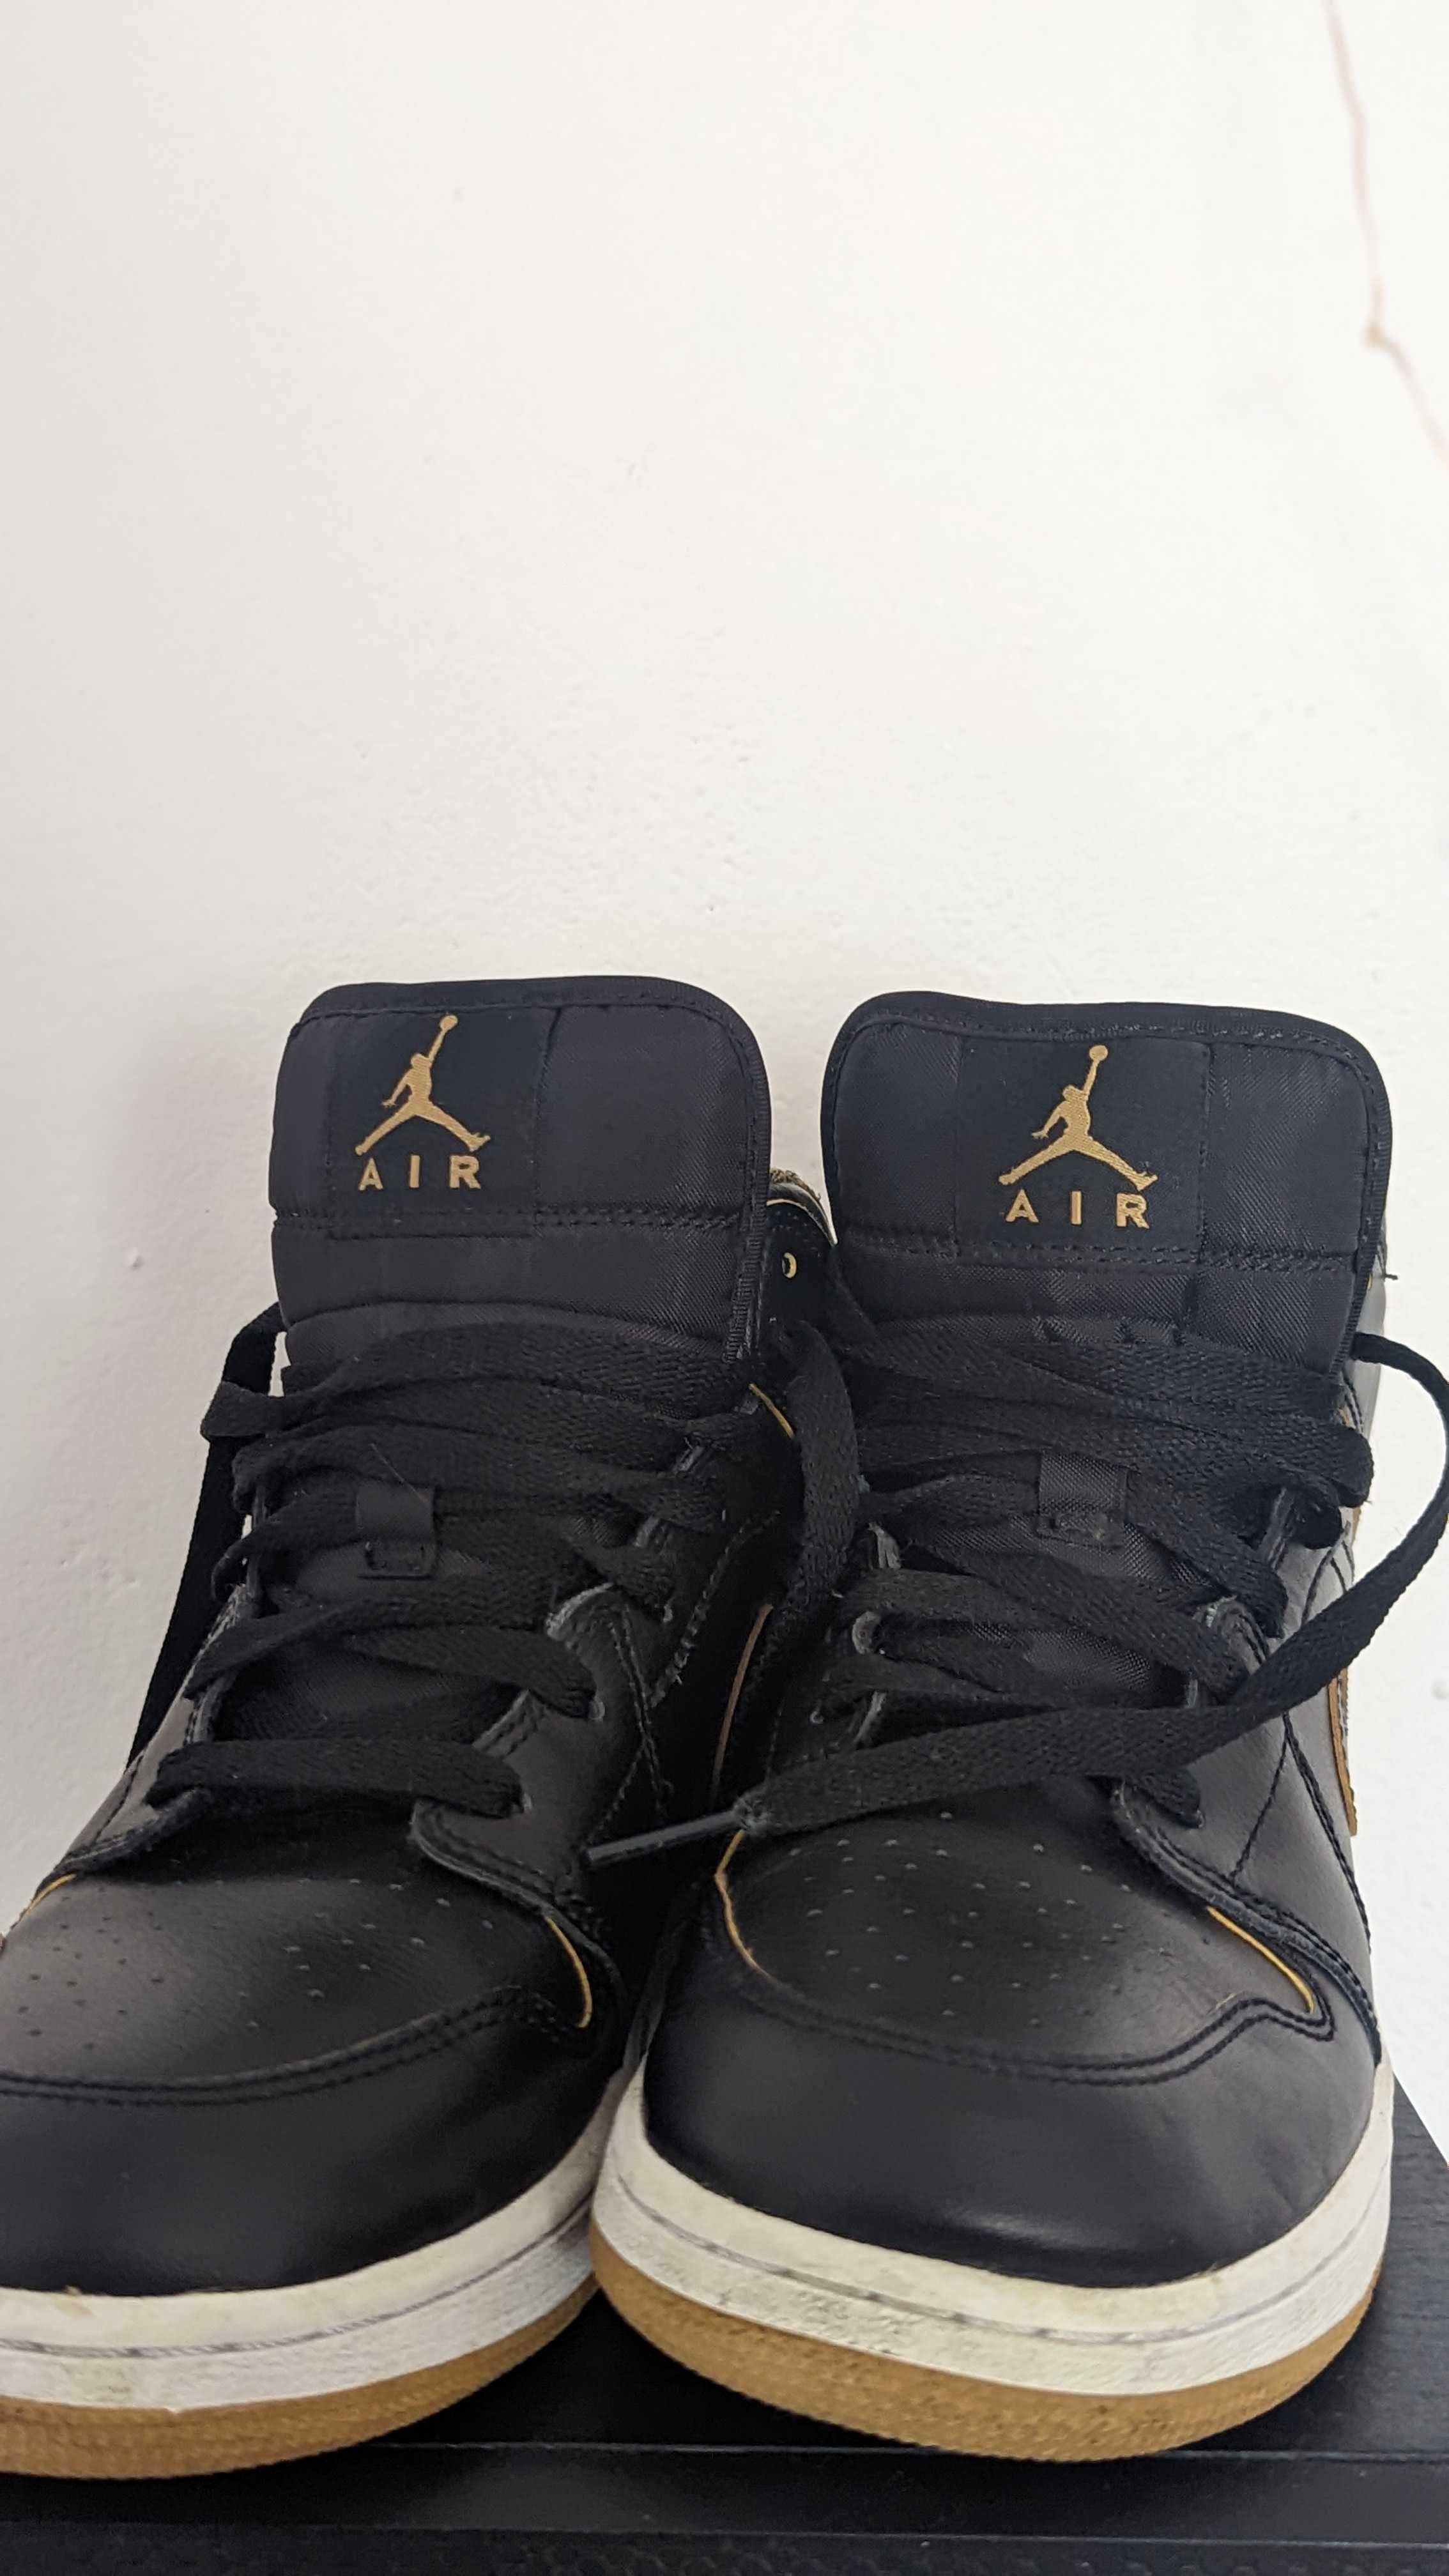 Air Jordan 1 Black Gold 2015 edition